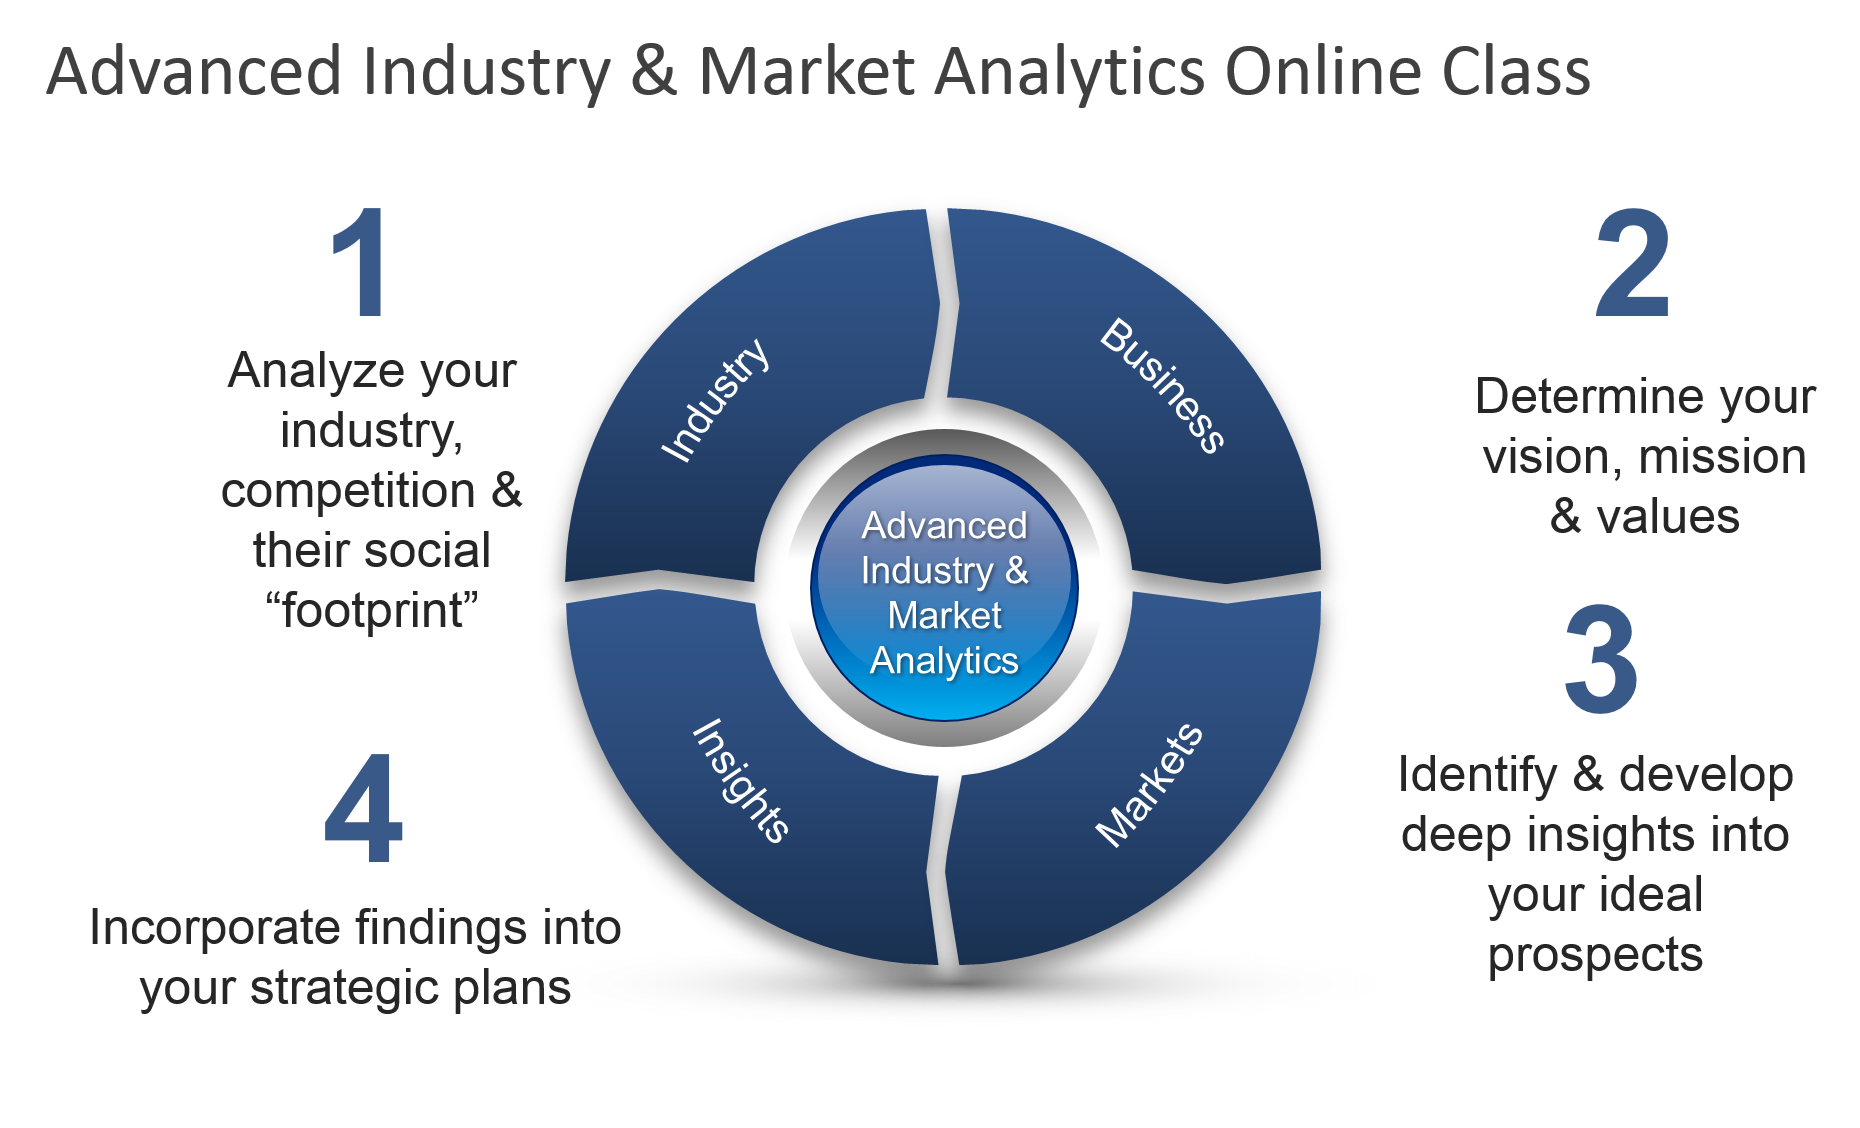 strategic planning market planning industry analytics business analysis market analytics